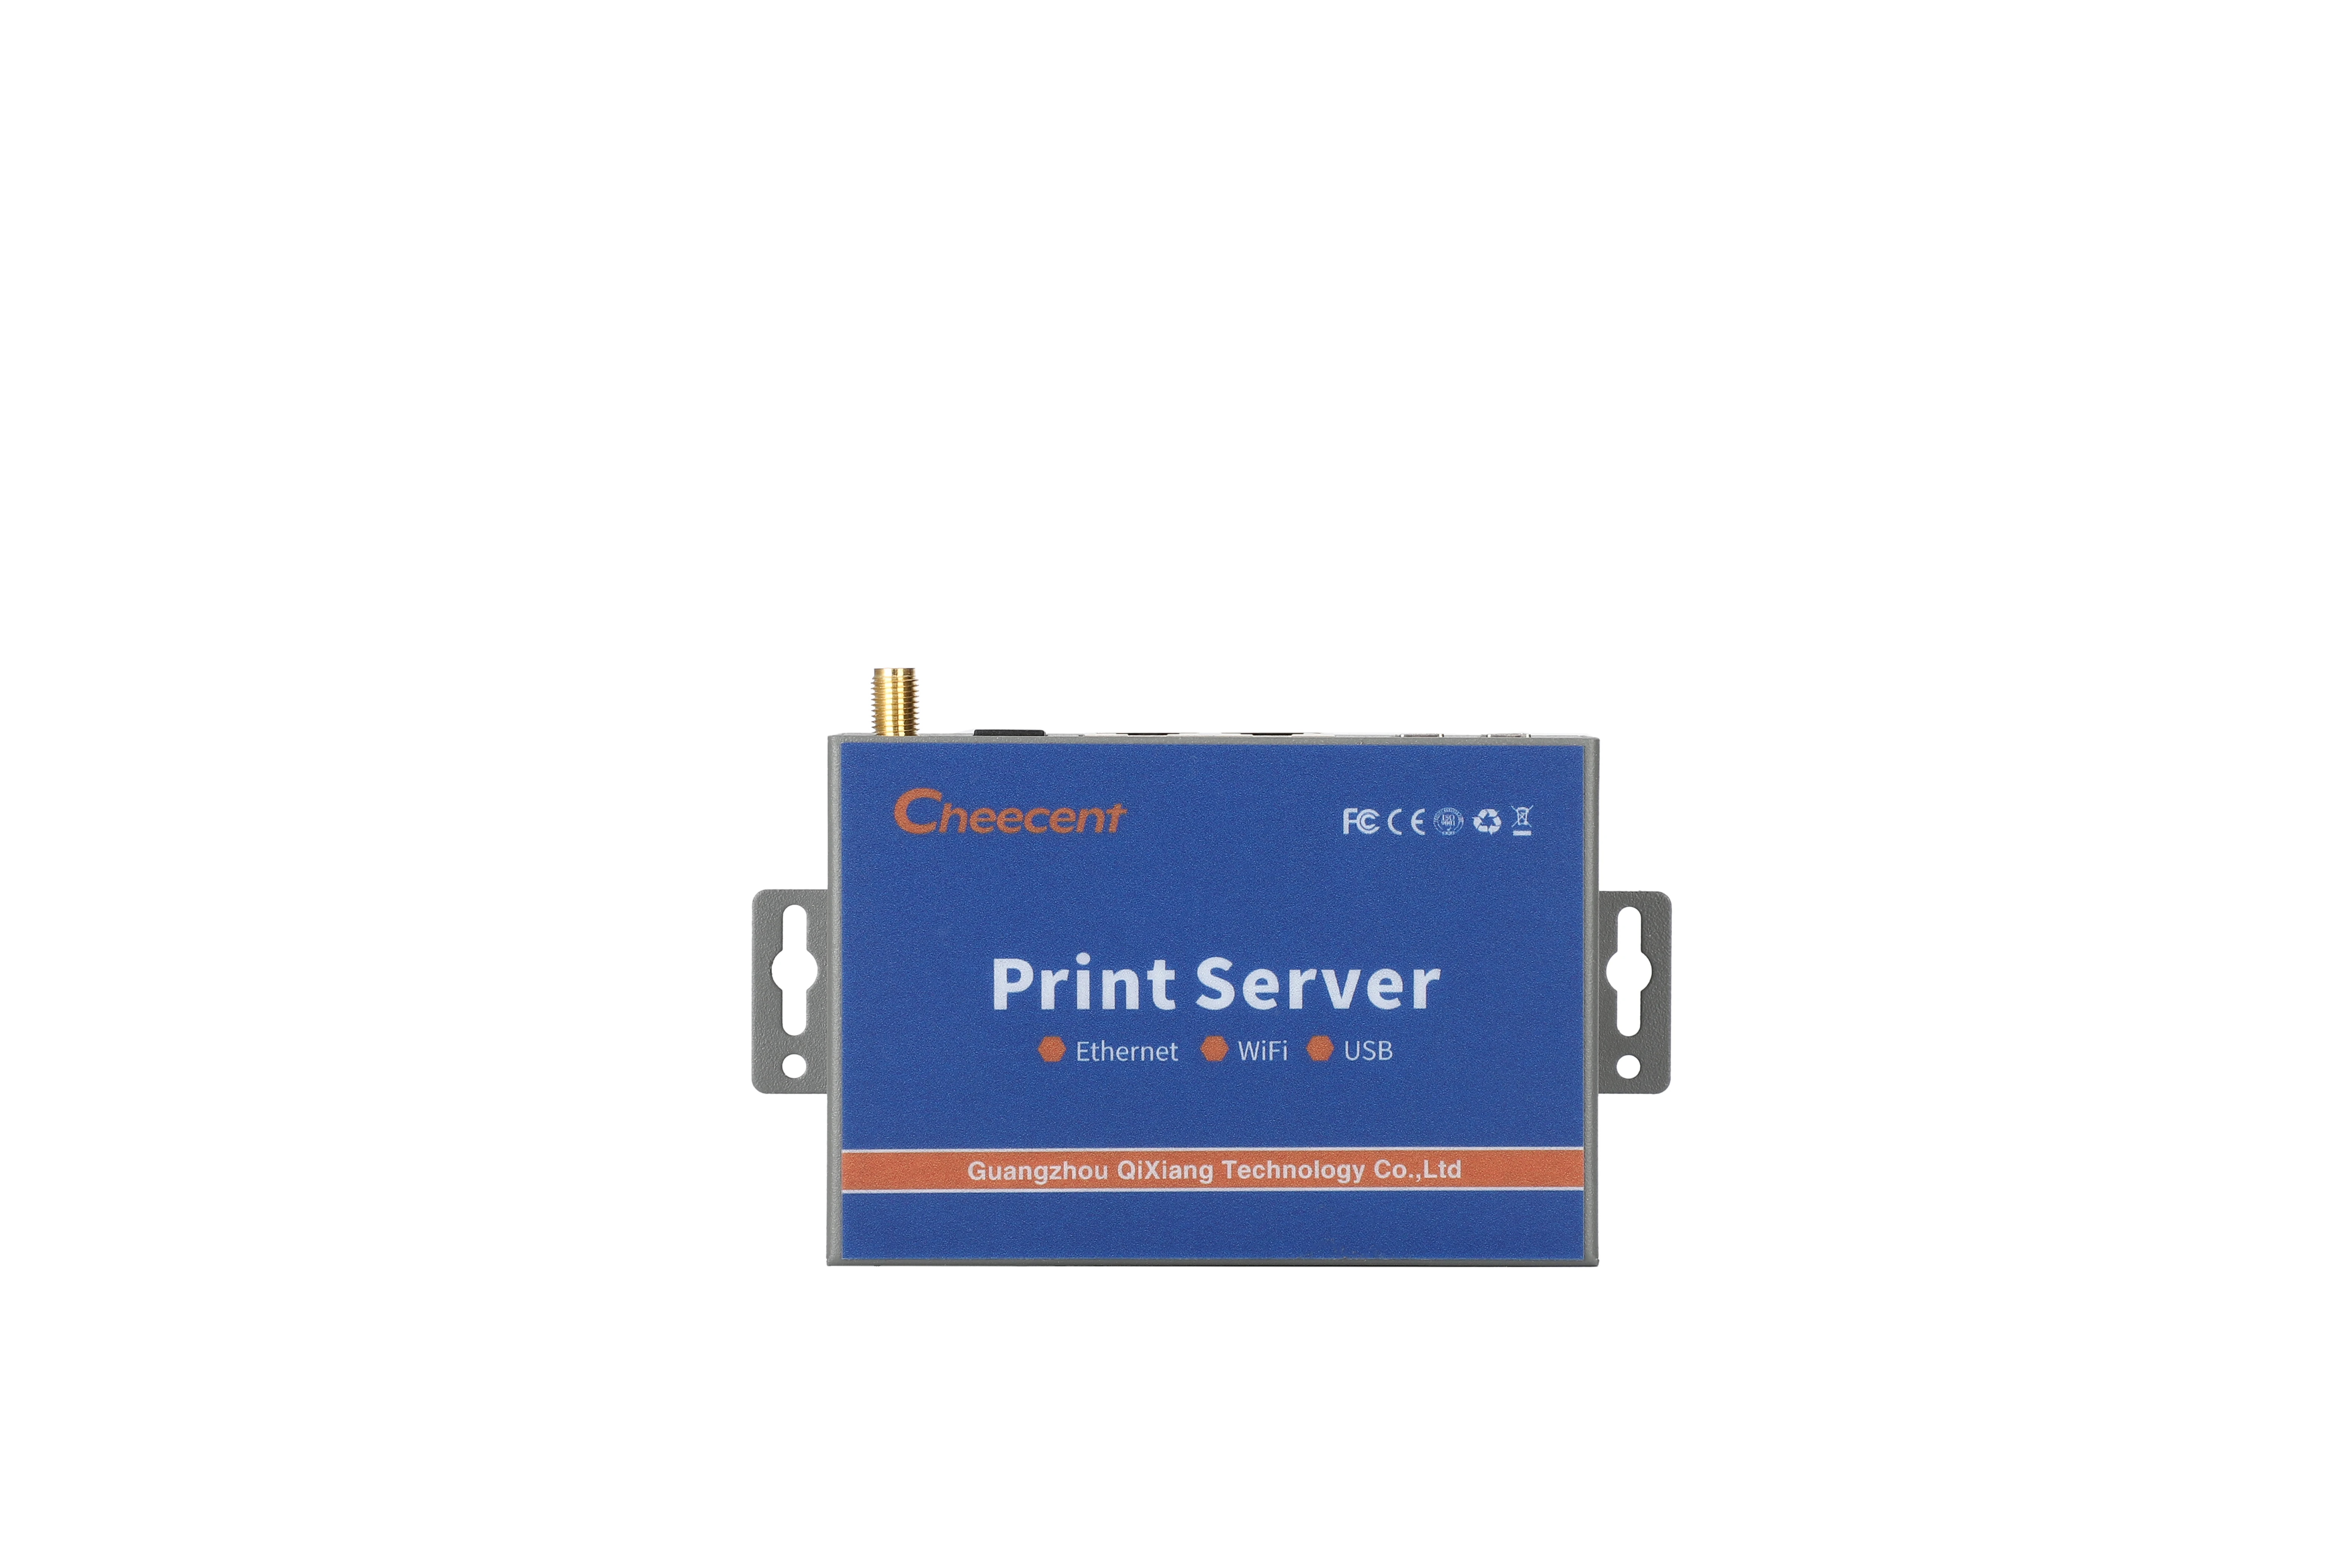 Print Servers